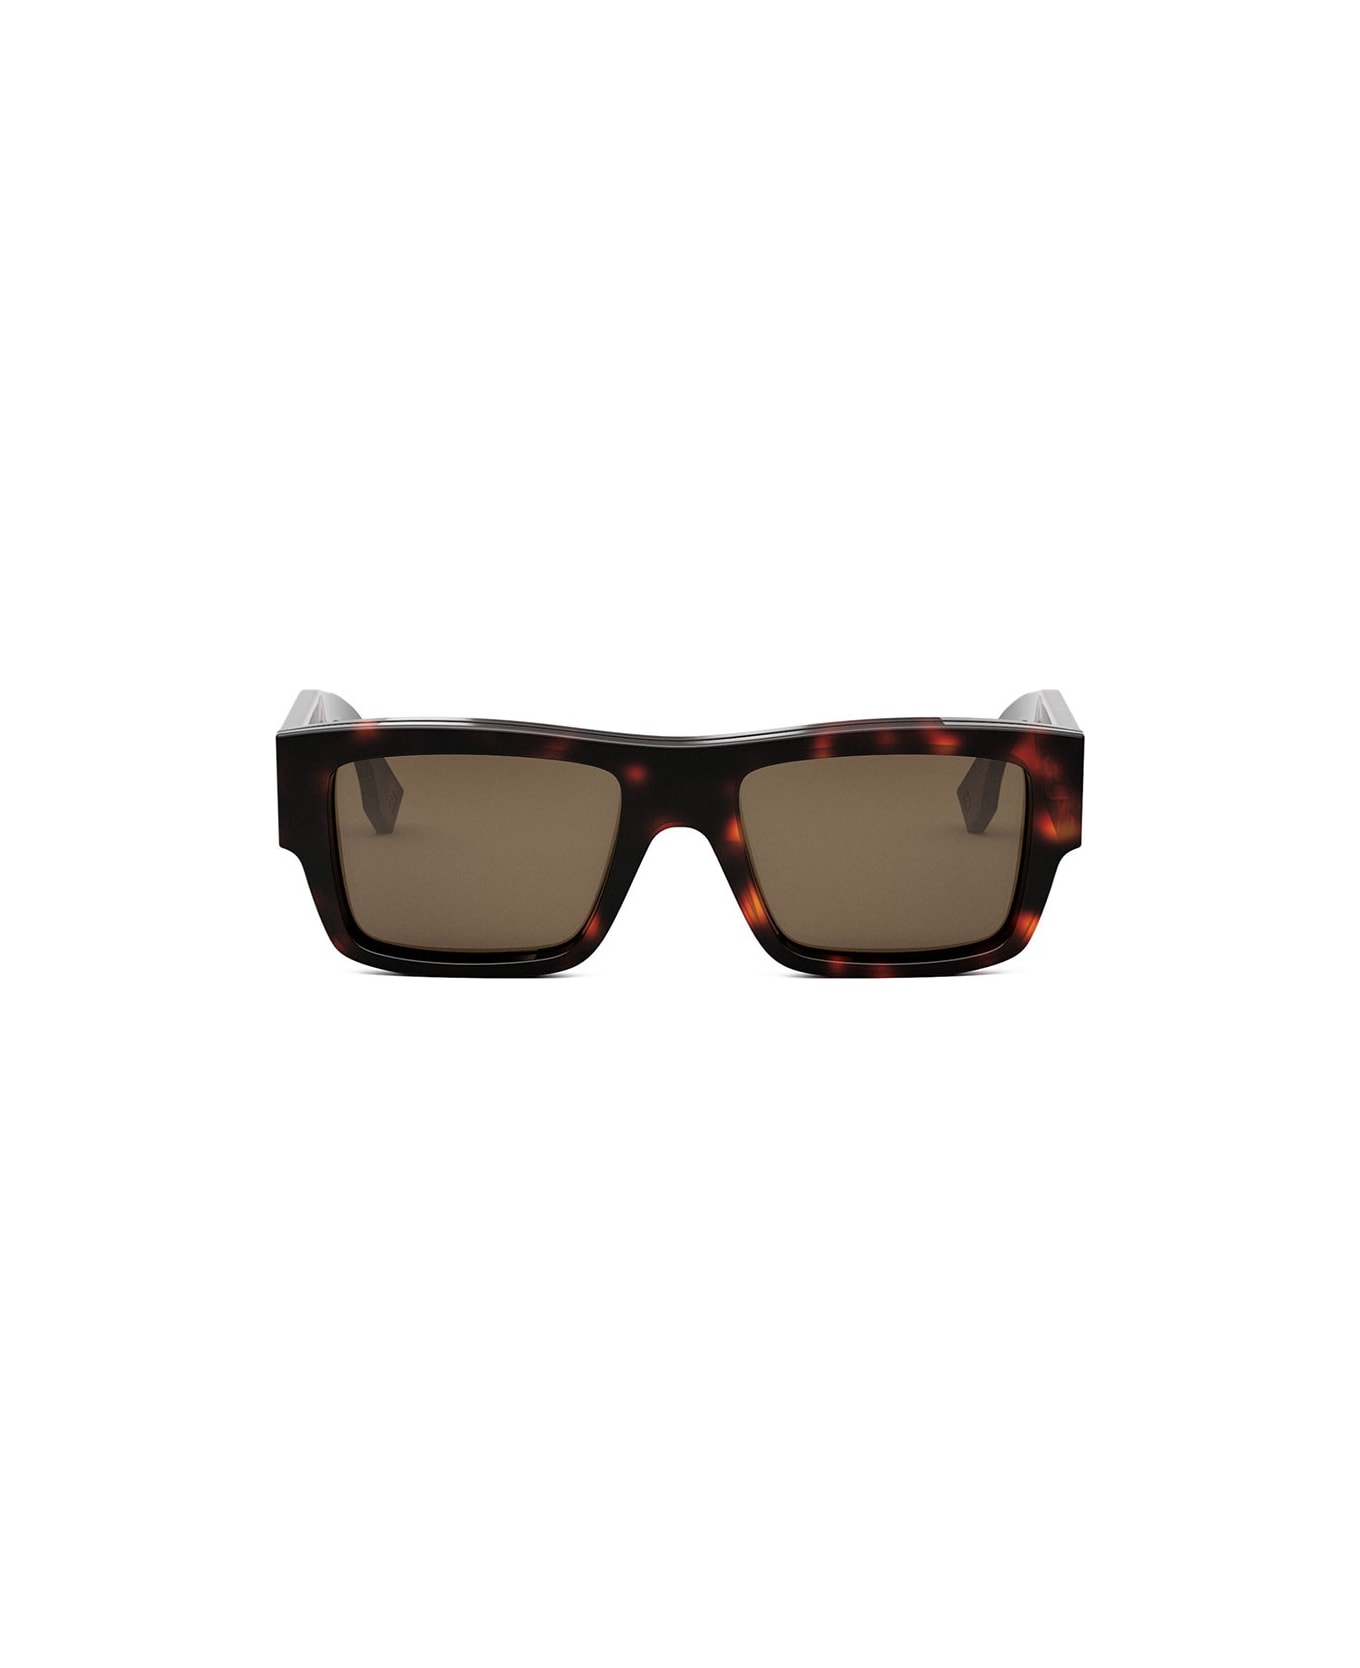 Fendi Eyewear Sunglasses - Havana/Marrone